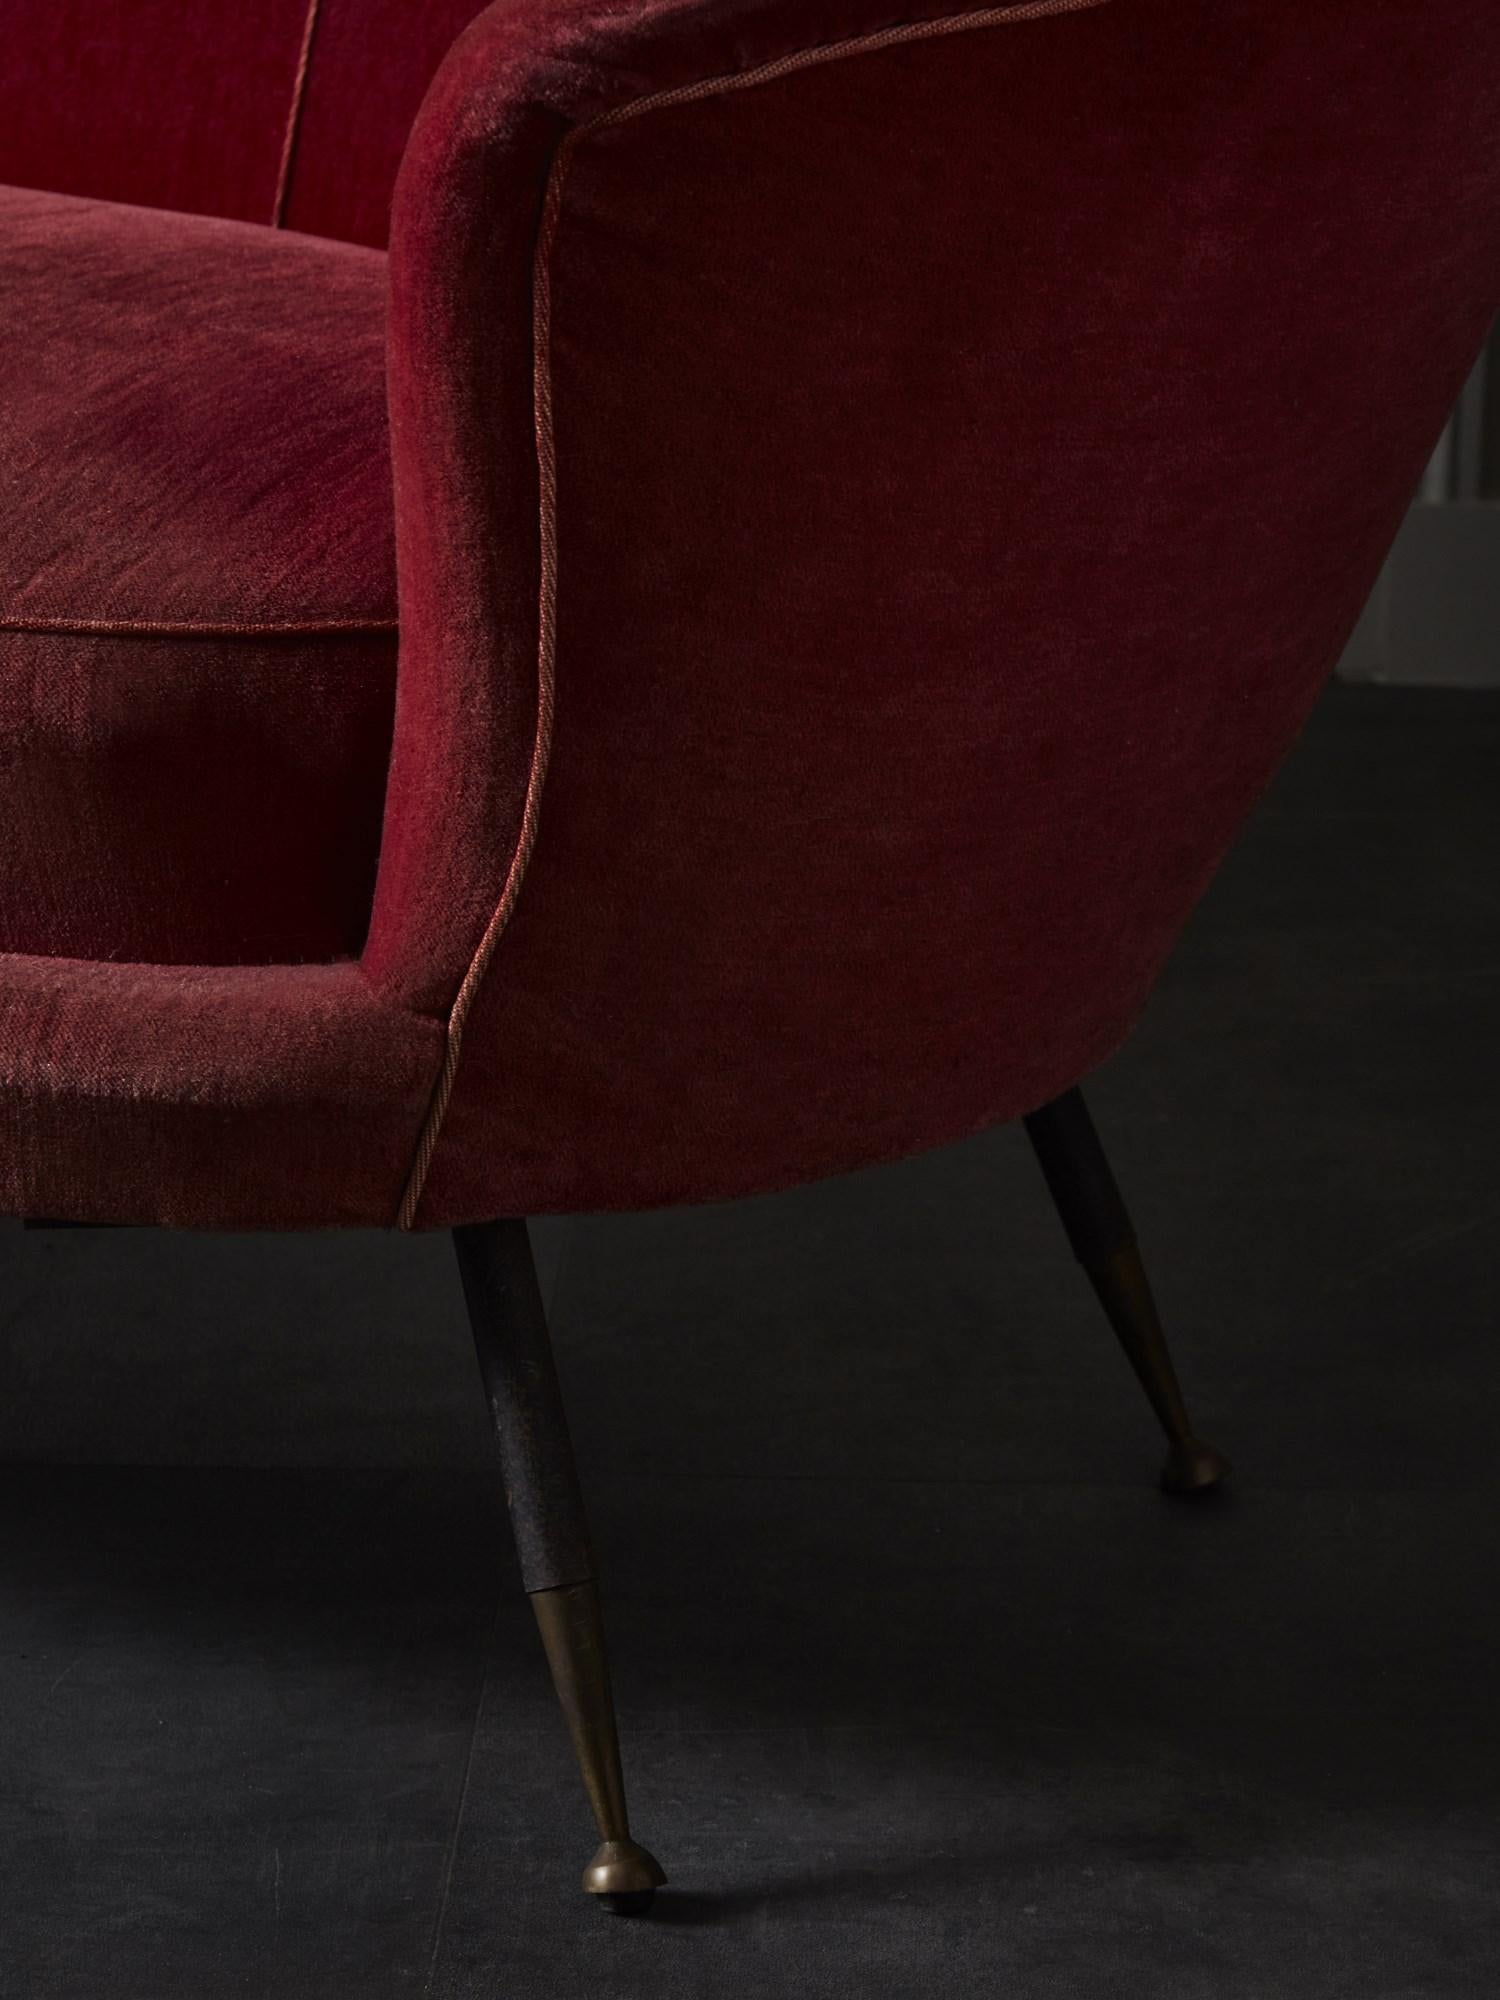 Vintage-Sofa zu Kostbarem Preis (Metall) im Angebot